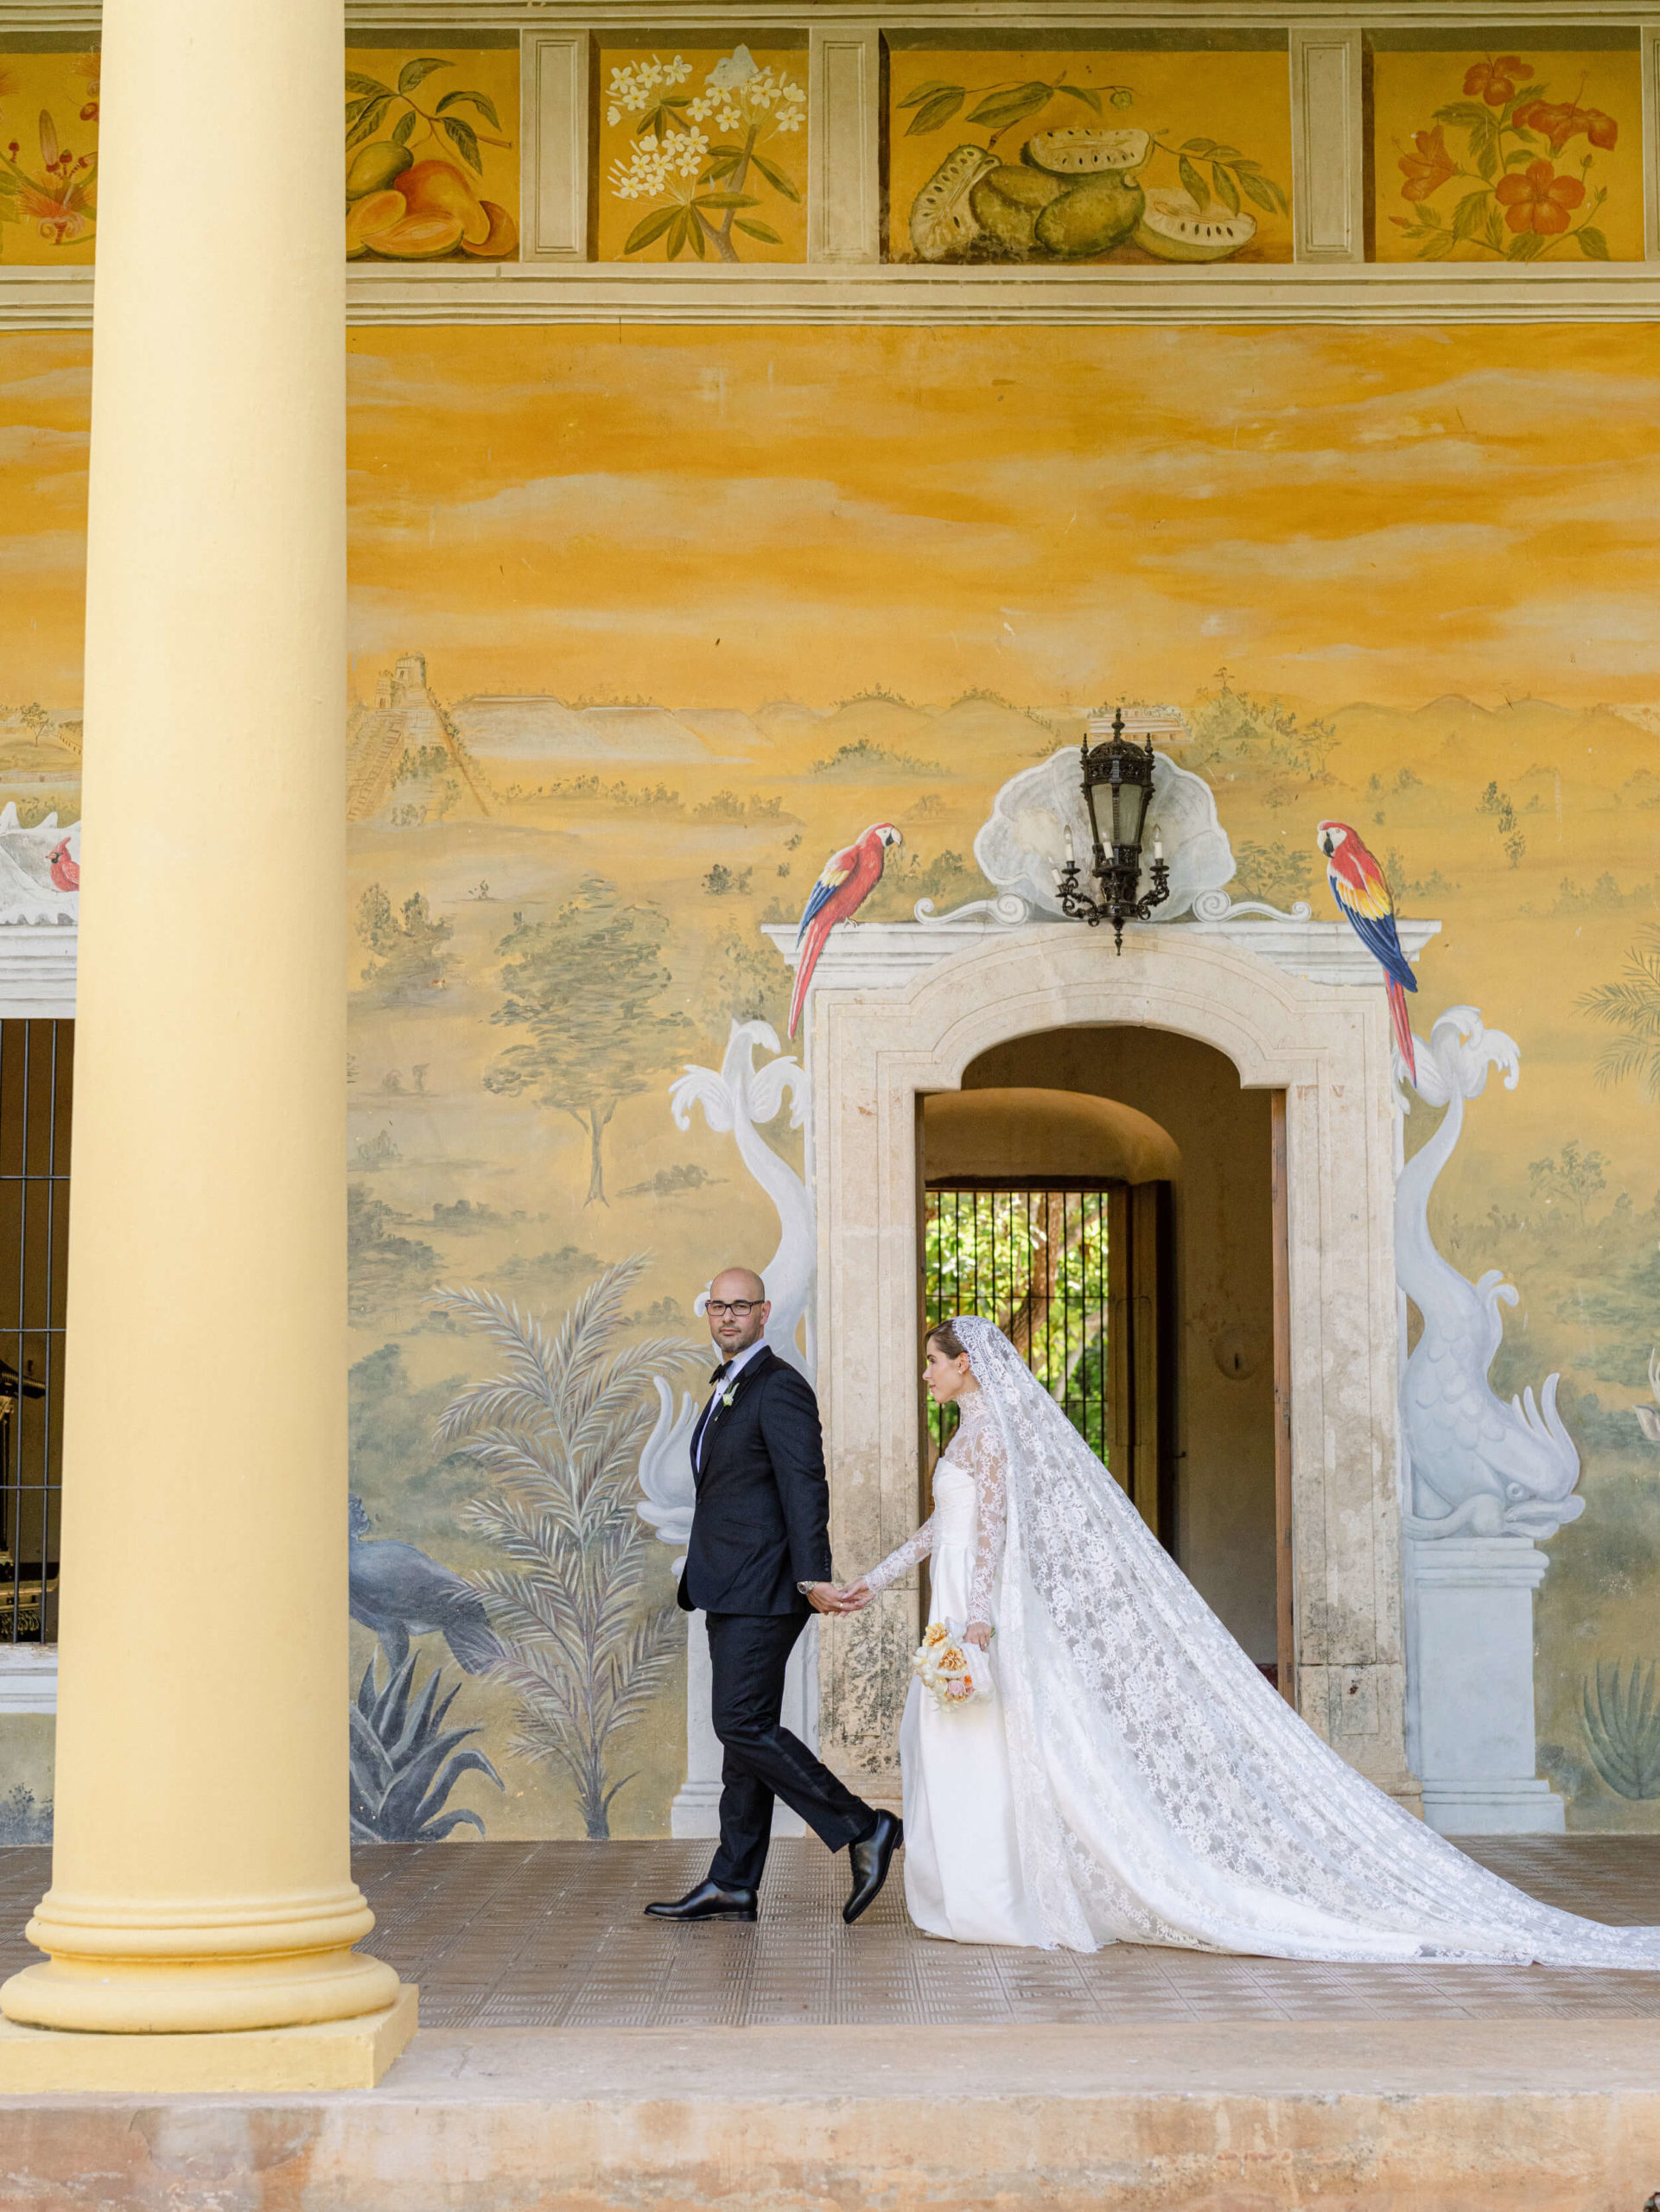 Stephanie and Pedro walk in colorful destination wedding venue; Mérida, Mexico.